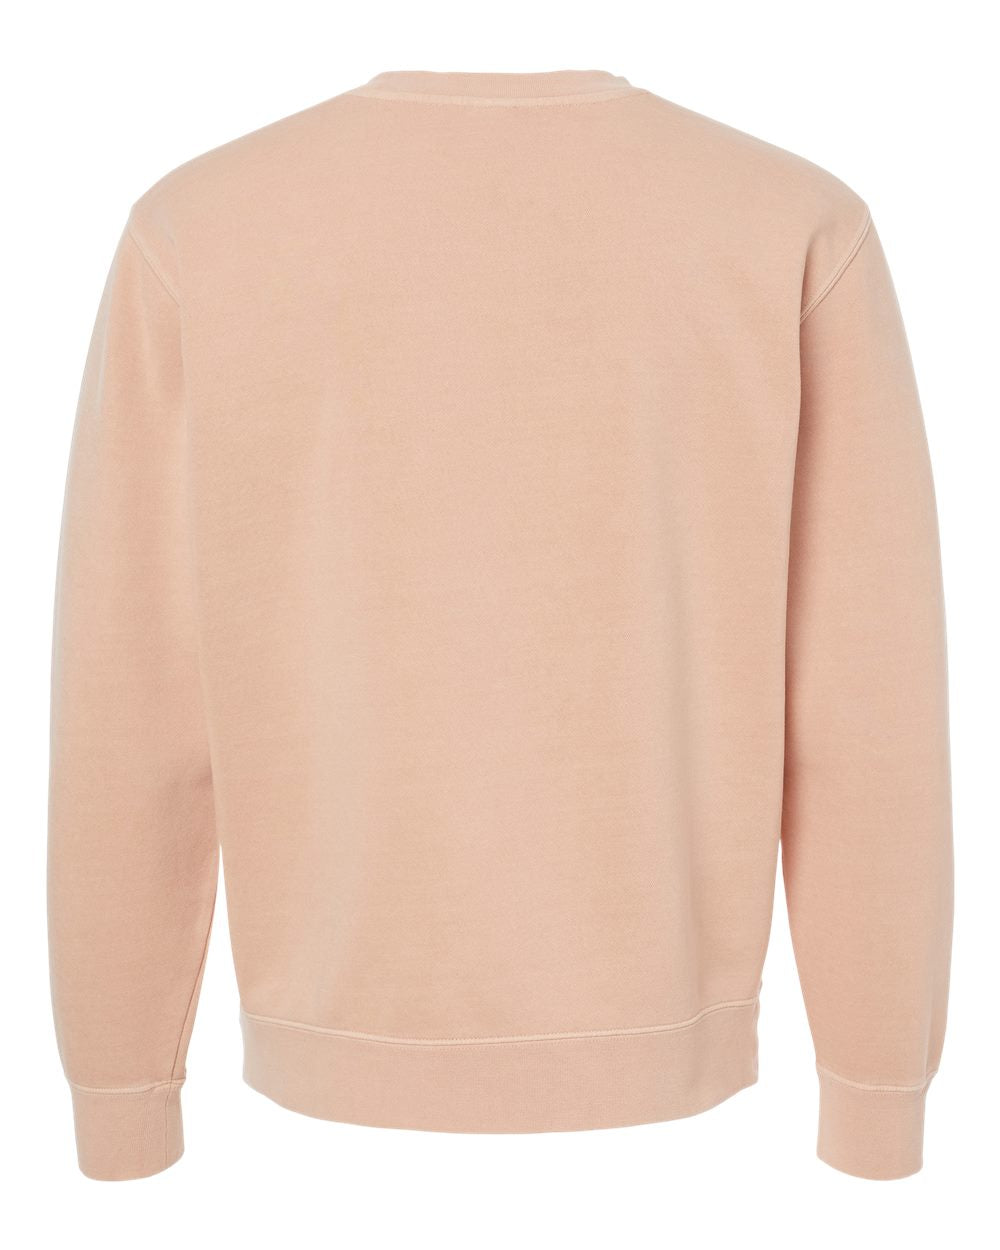 Unisex Midweight Pigment-Dyed Crewneck Sweatshirt